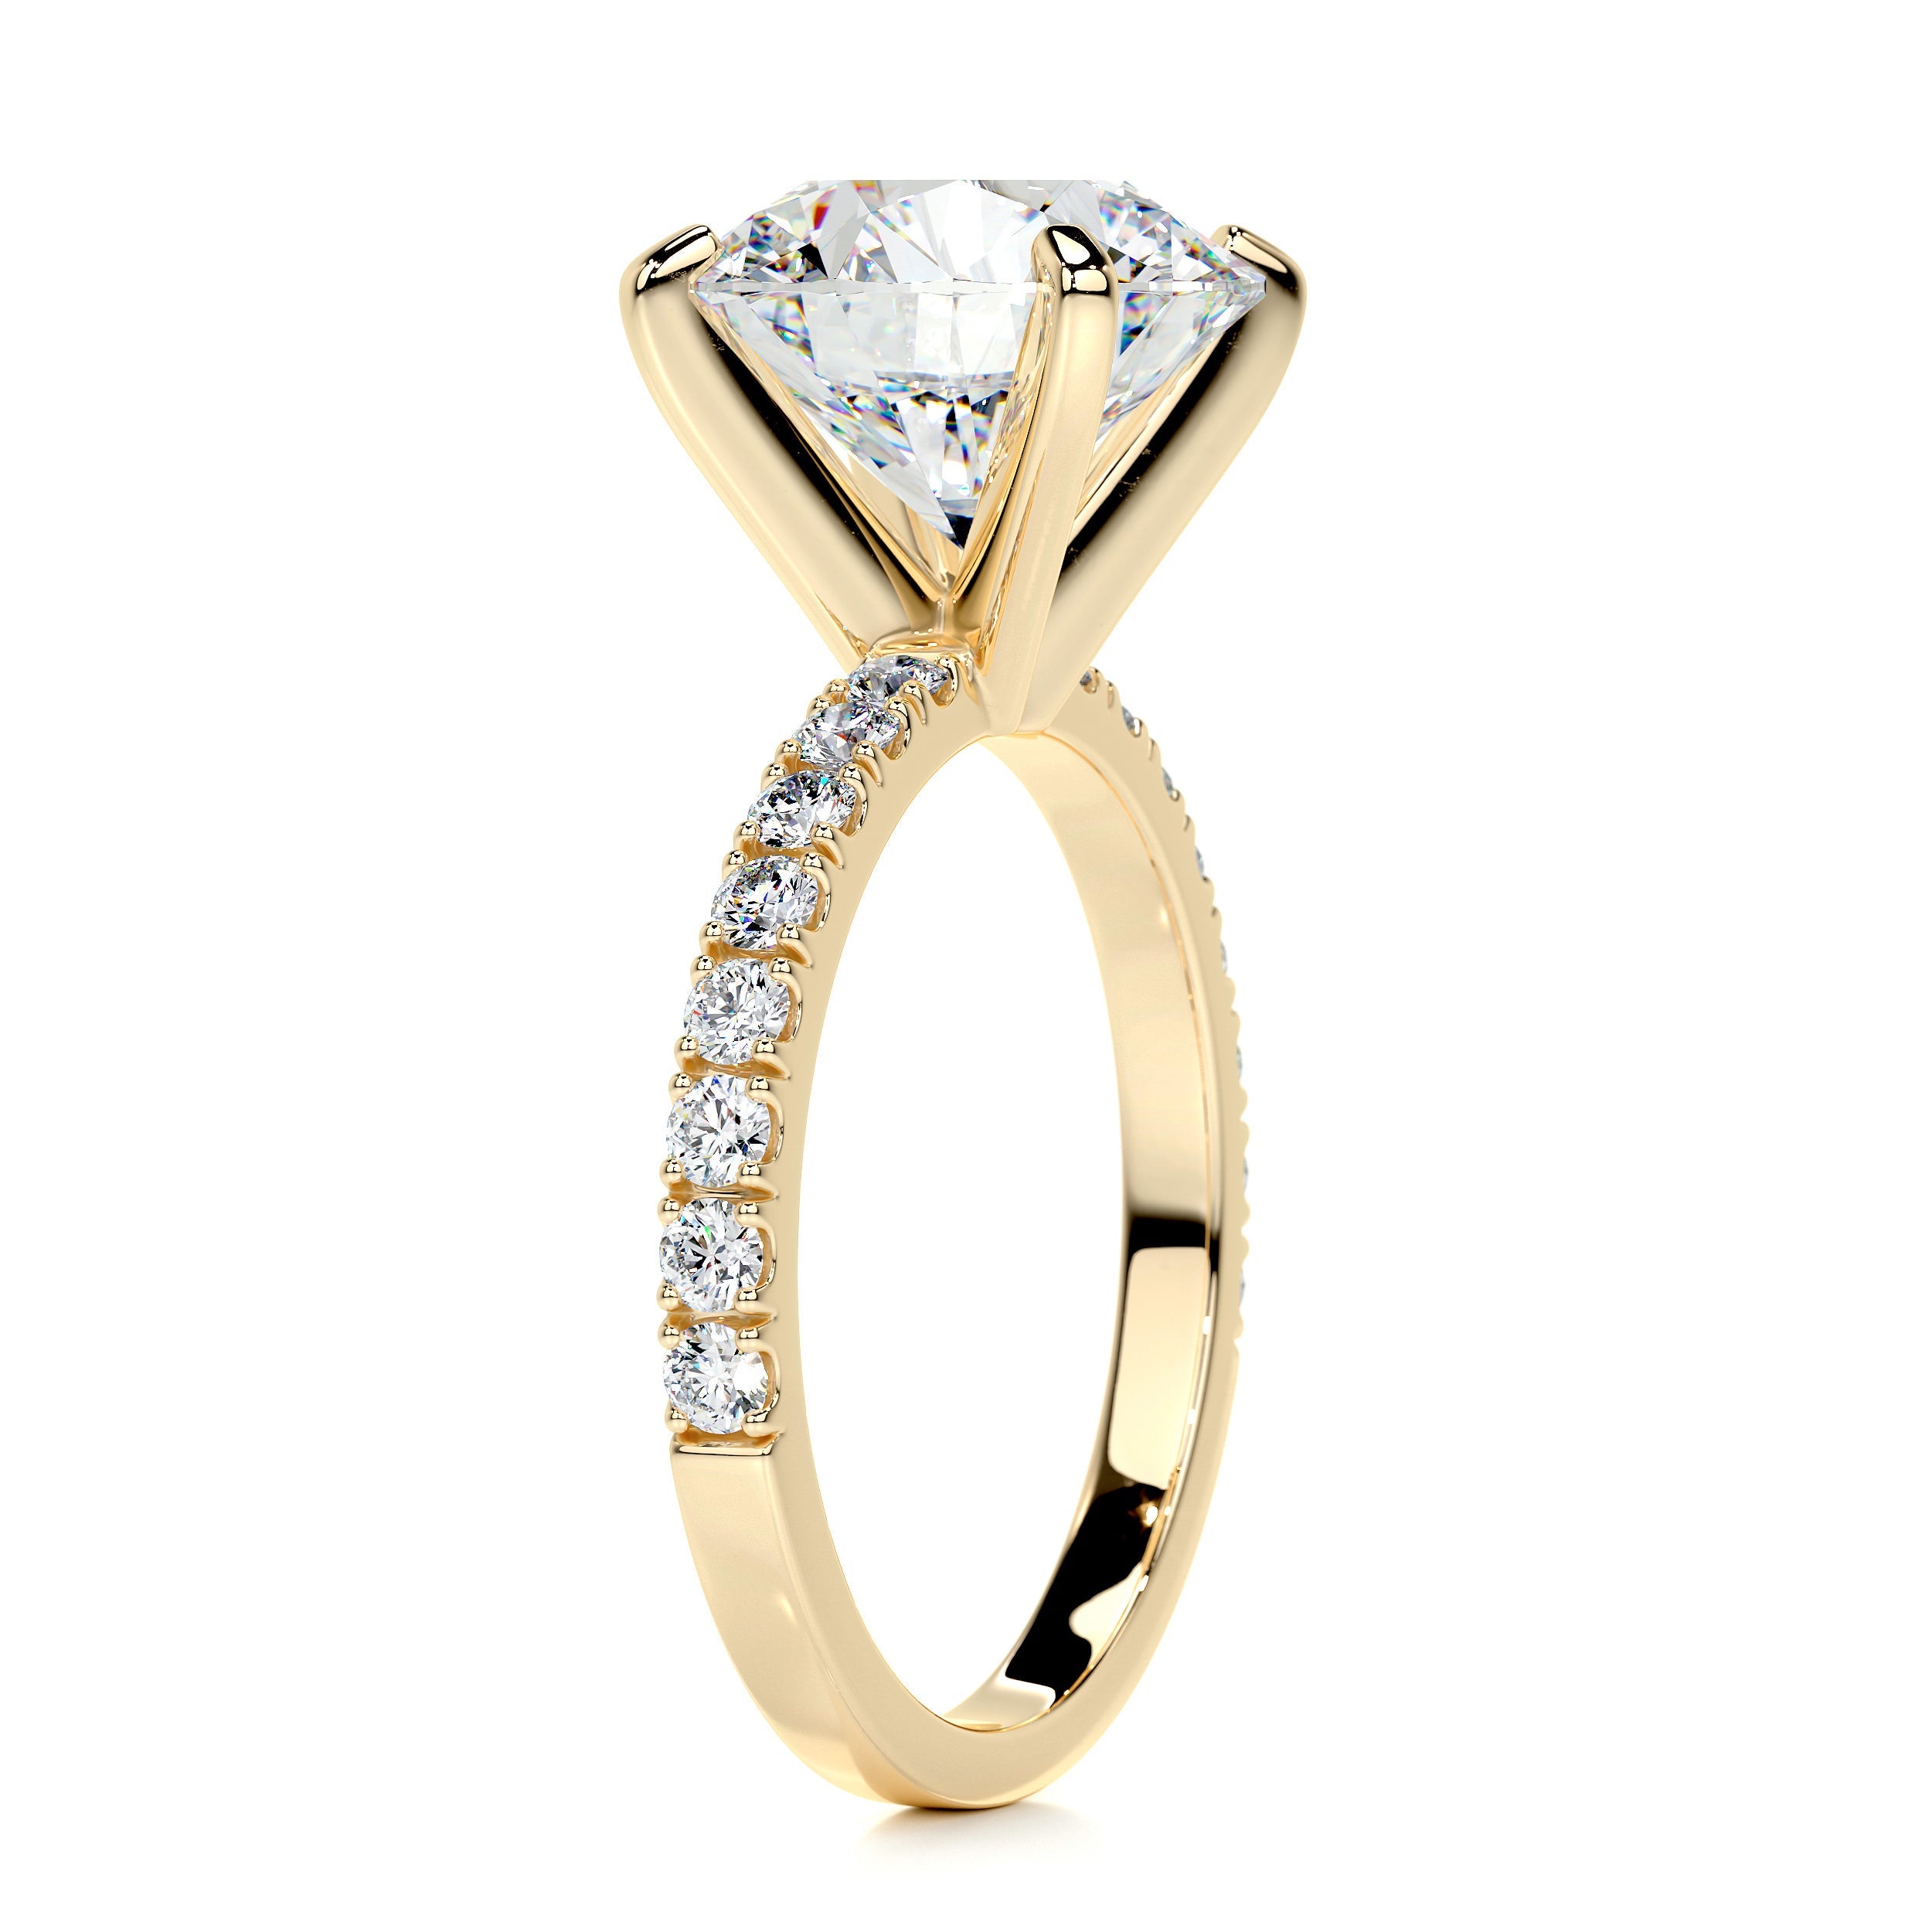 Alison Moissanite & Diamonds Ring   (5.5 Carat) -18K Yellow Gold (RTS)